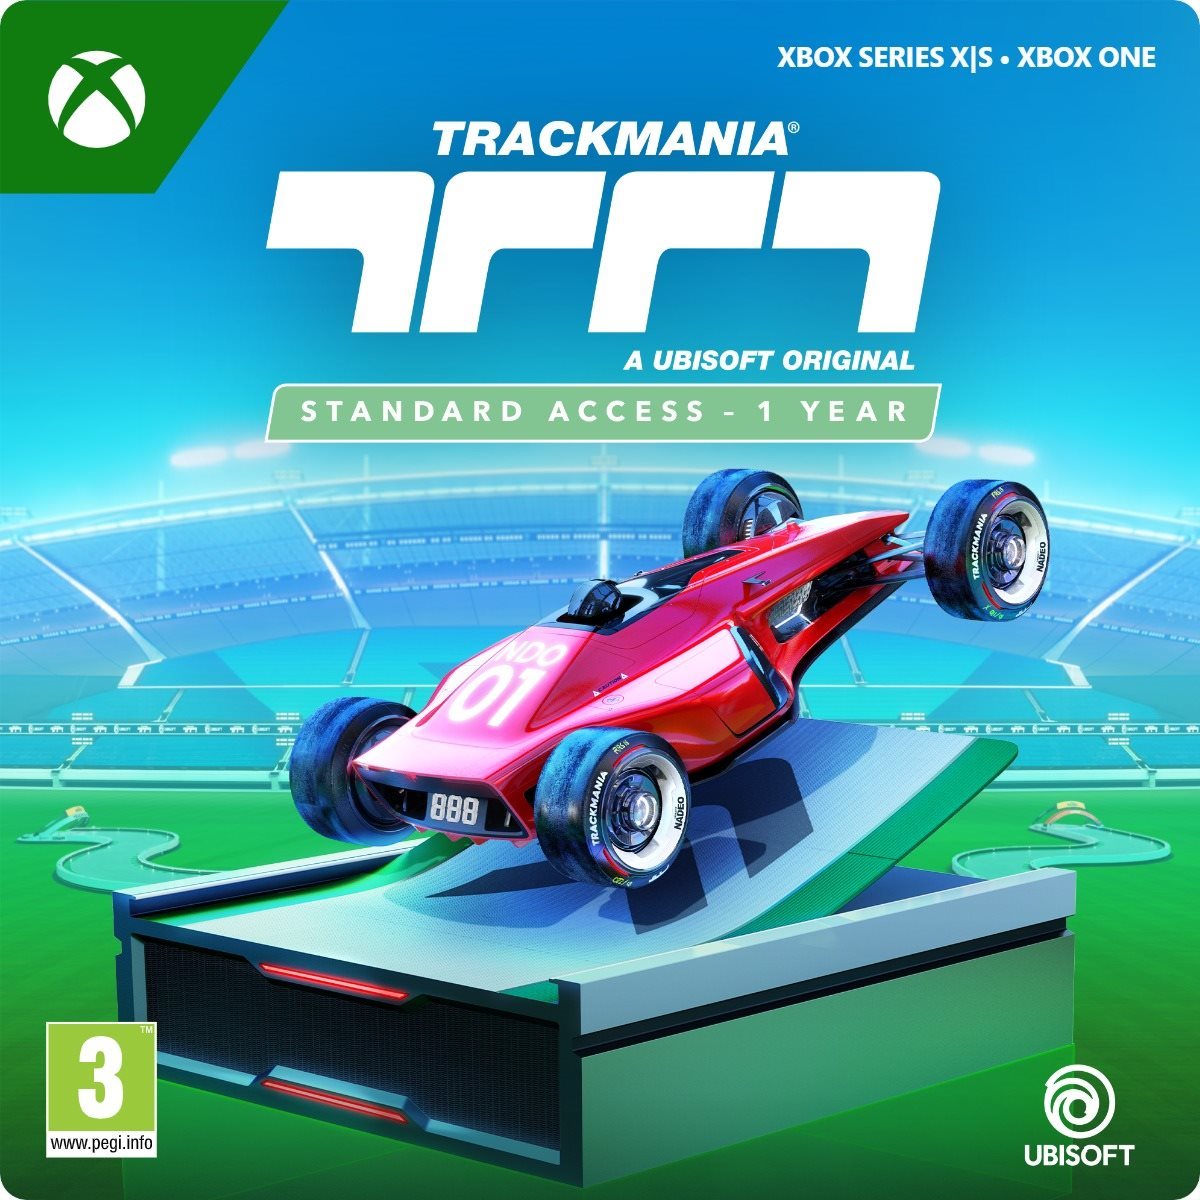 Trackmania Standard Access - 1 Year - Xbox DIGITAL